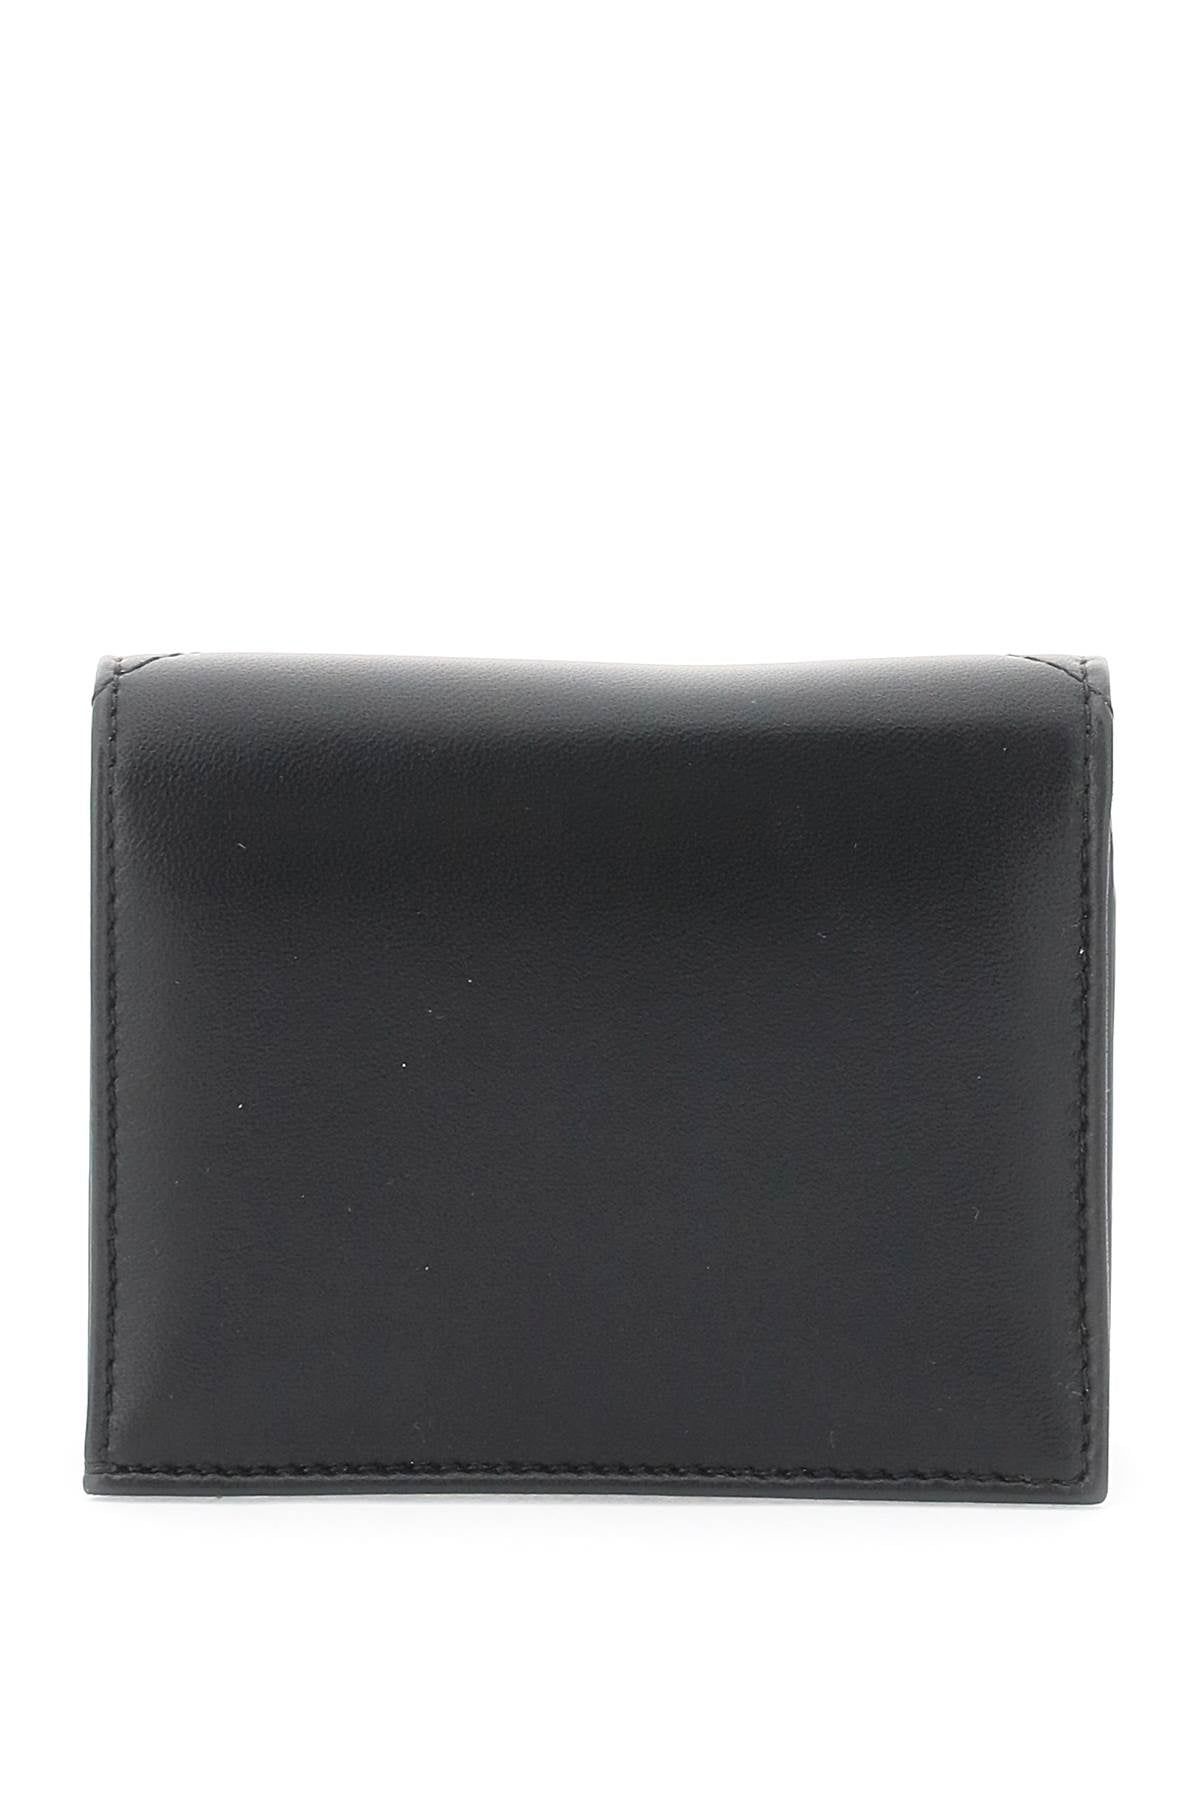 Saint Laurent Studded Wallet in Black for Men